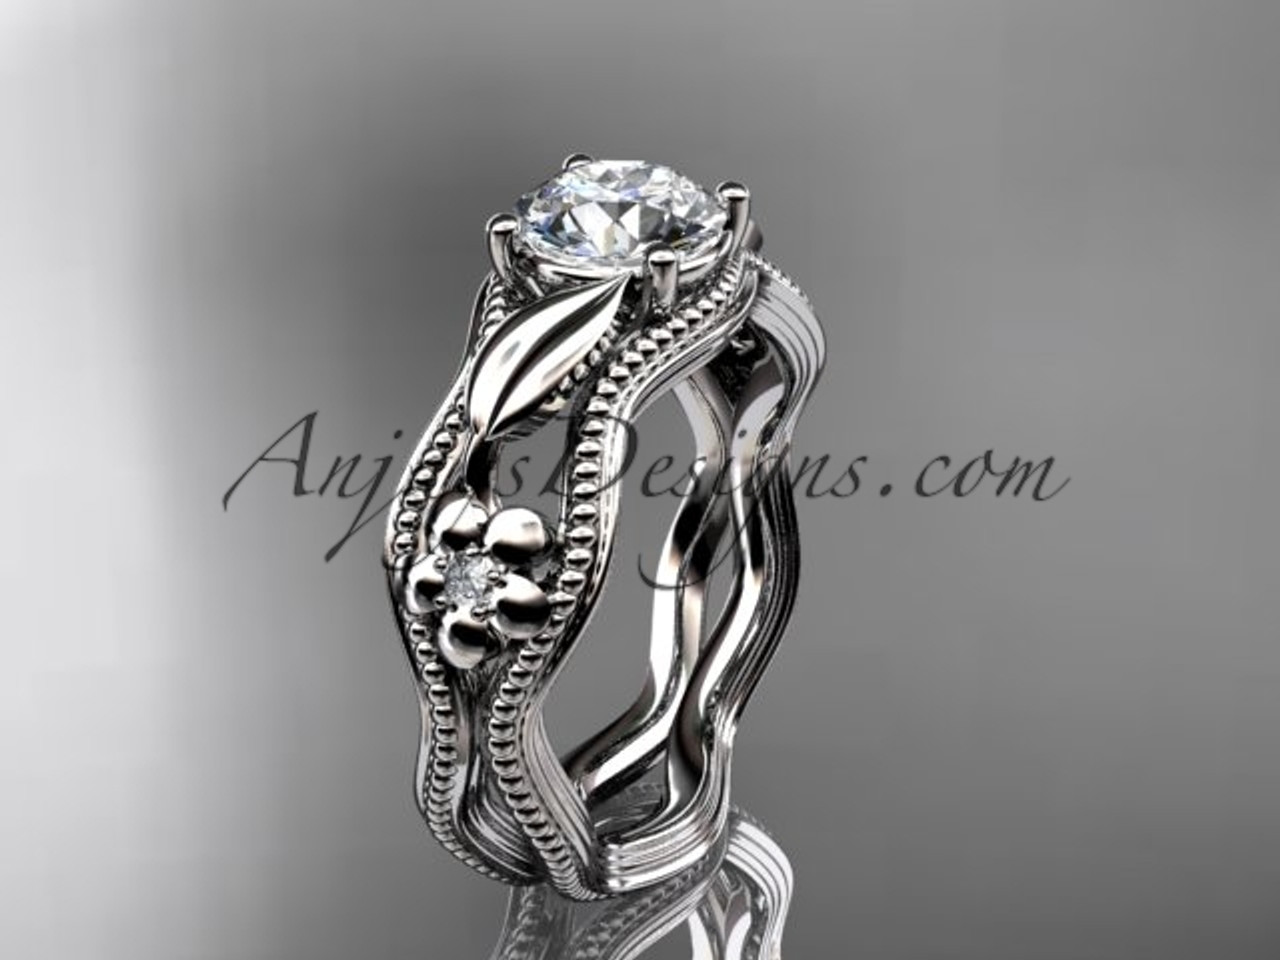 14K White Gold Unique Alexandrite Engagement Ring Women Leaf Ring -  gardensring